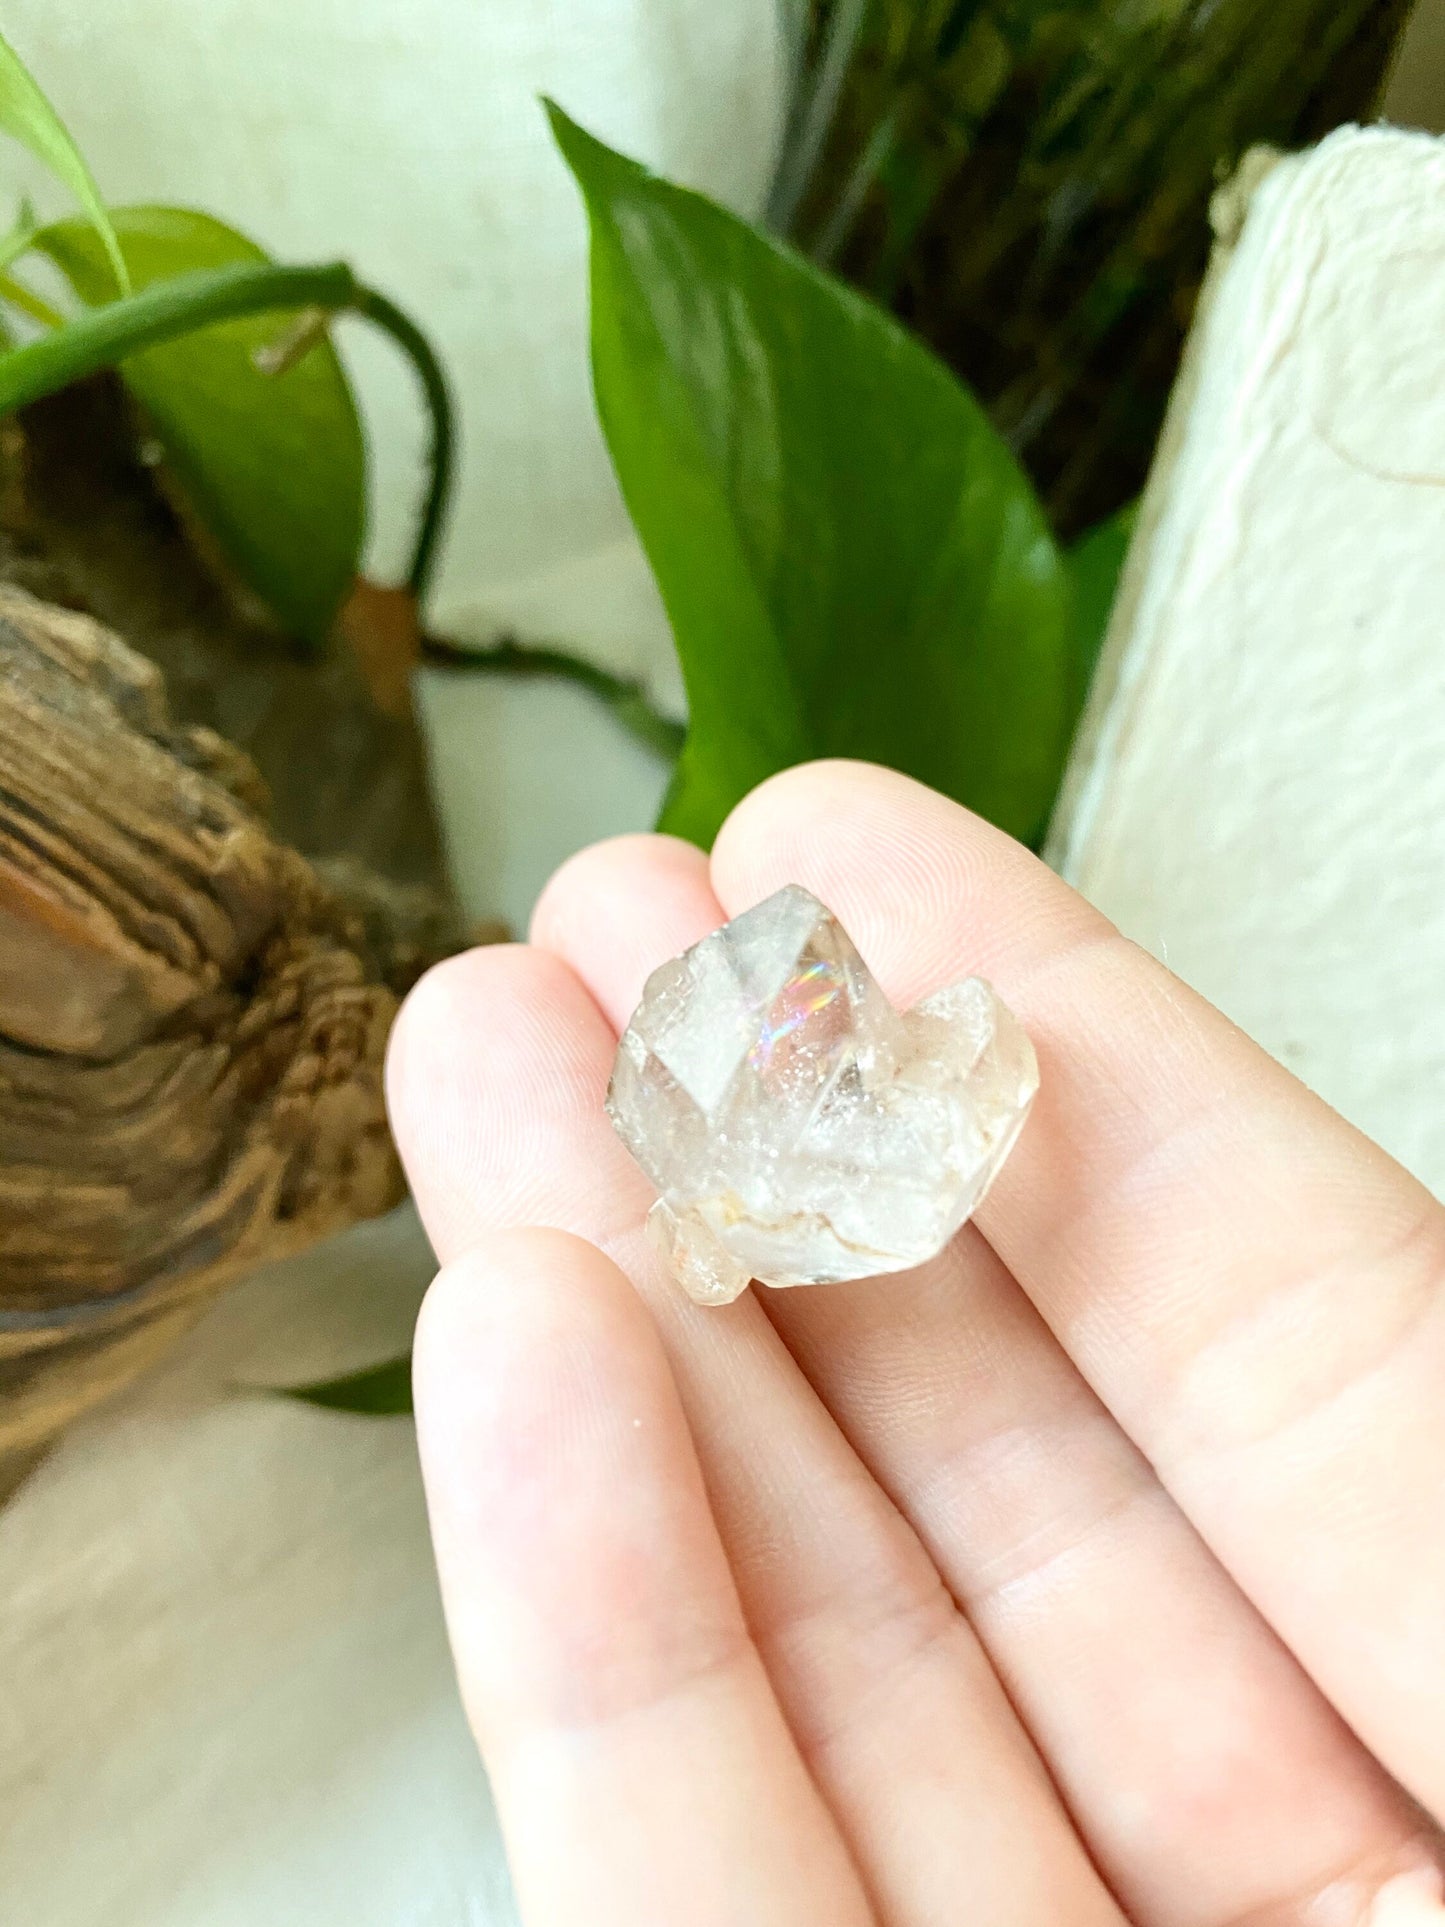 Clear Quartz “Diamond” Crystal Point from Forward Mine Nigeria - Rock Shop